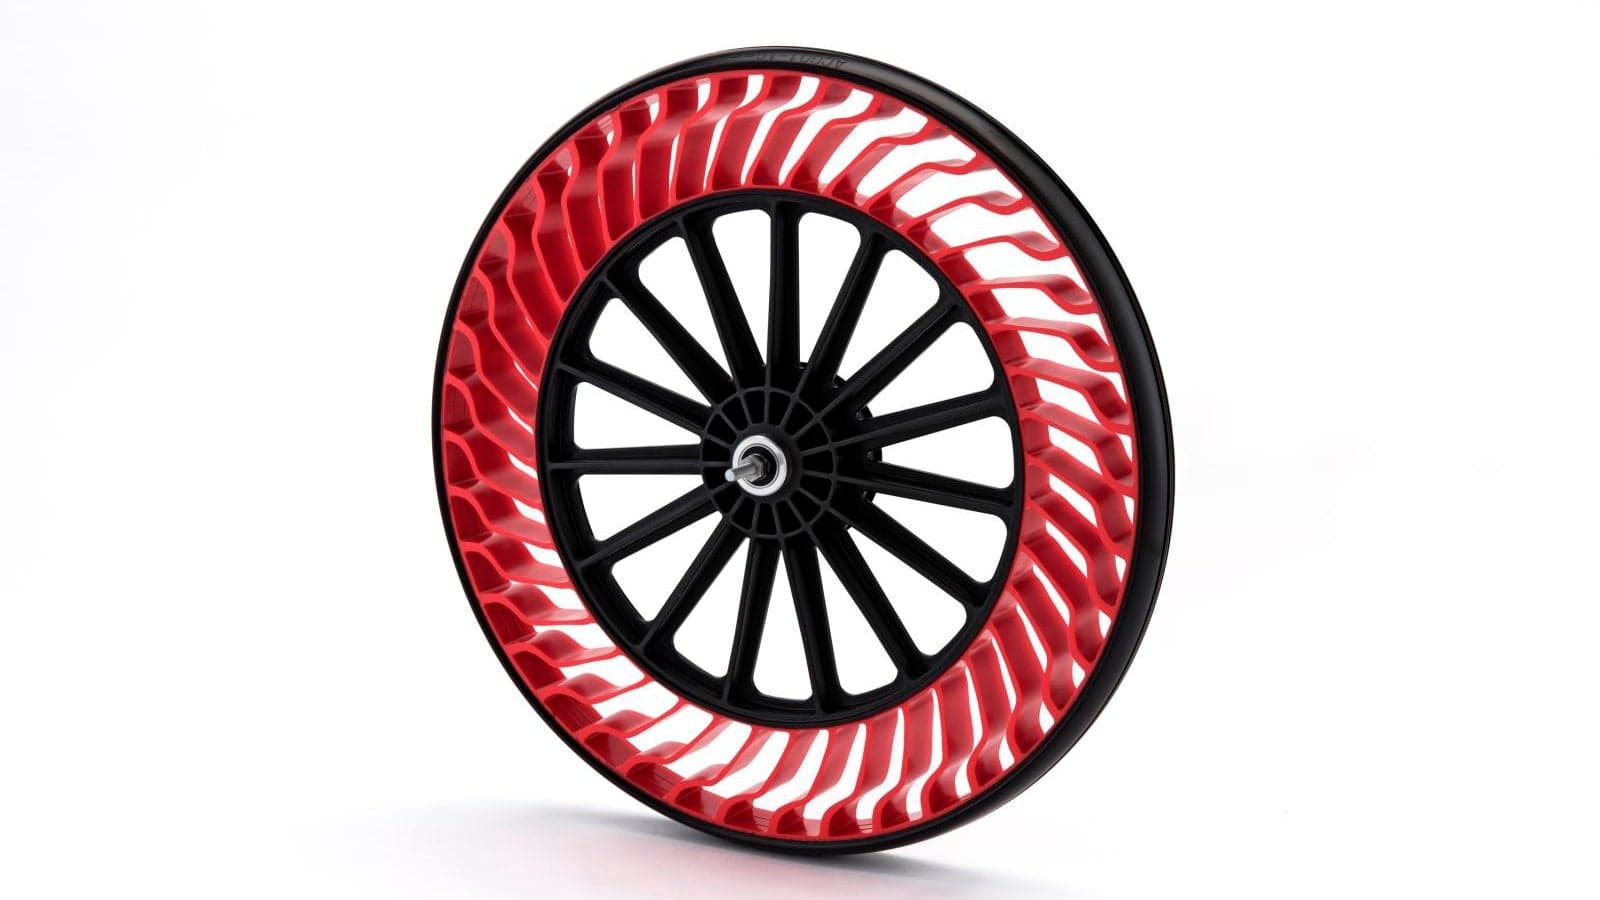 Bridgestone Set to Introduce Airless Tires